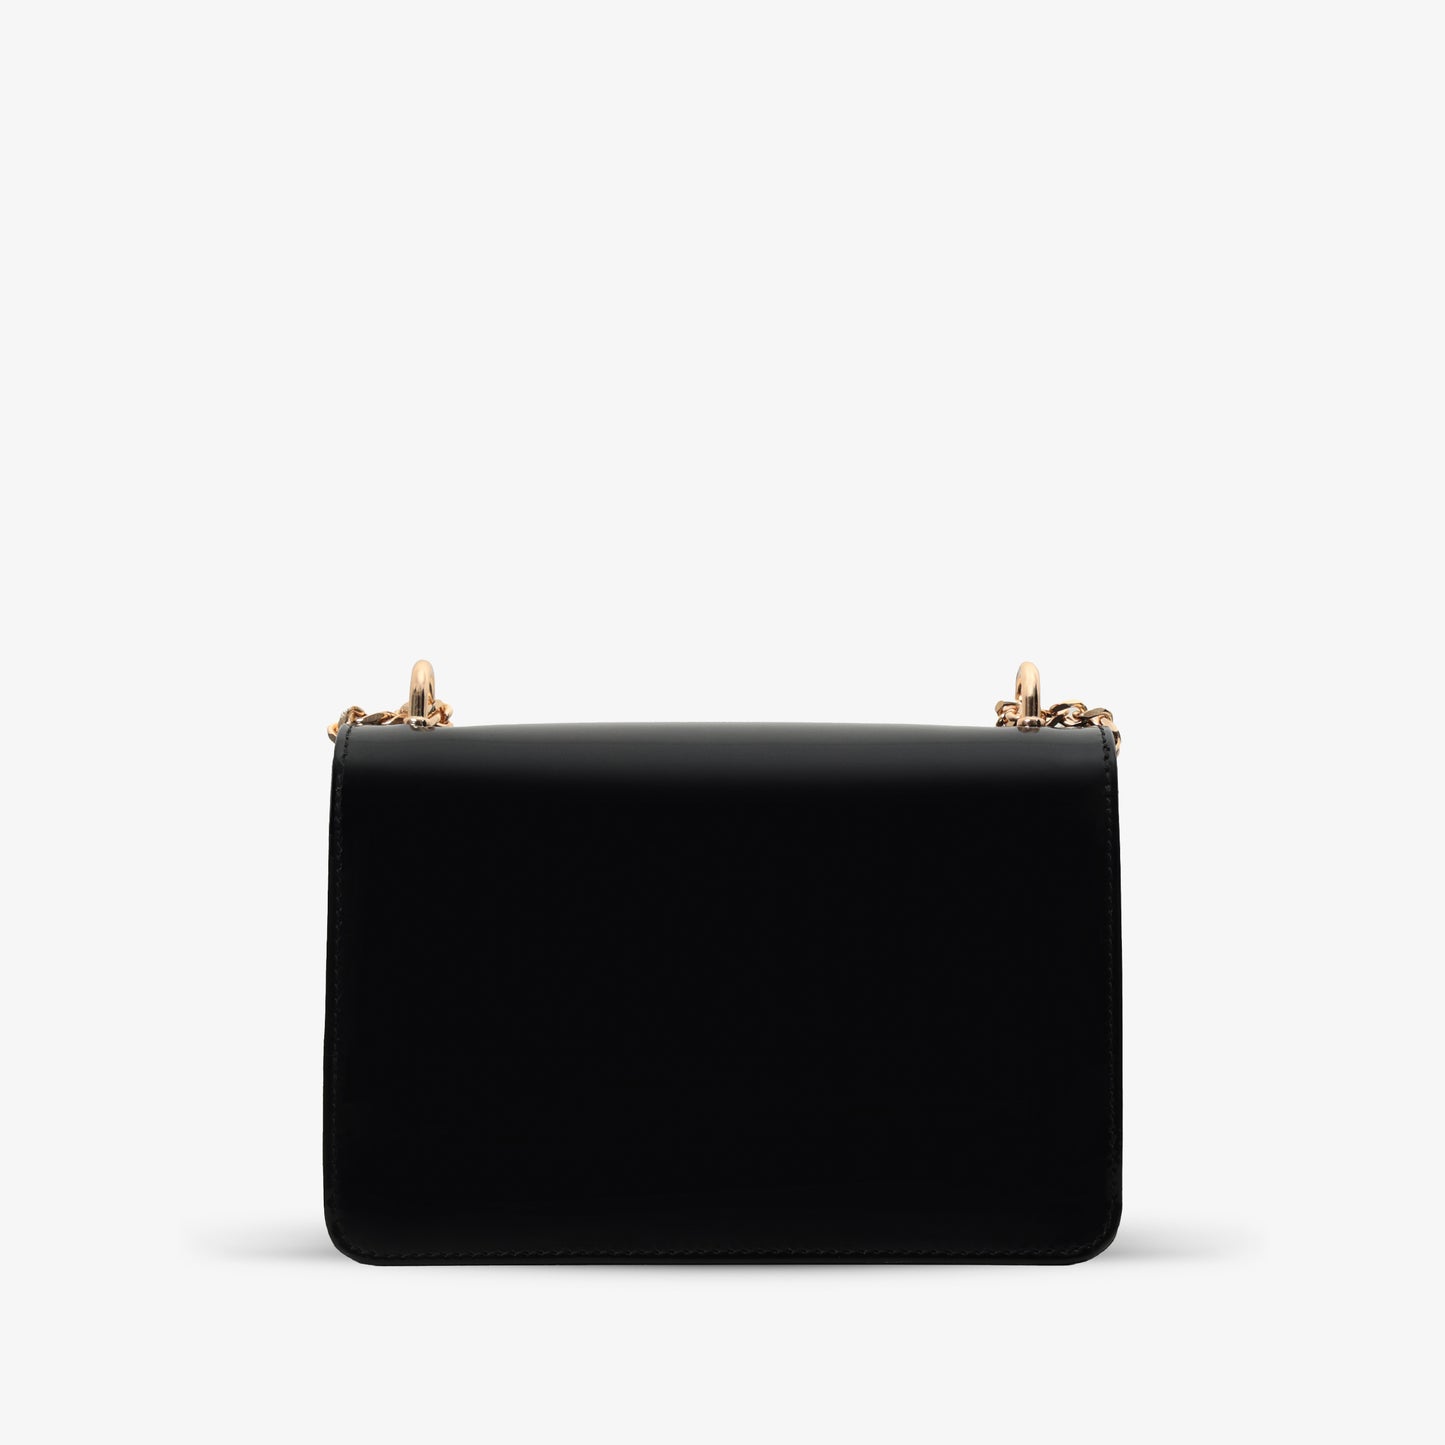 The Ferrara Black Patent Leather Handbag